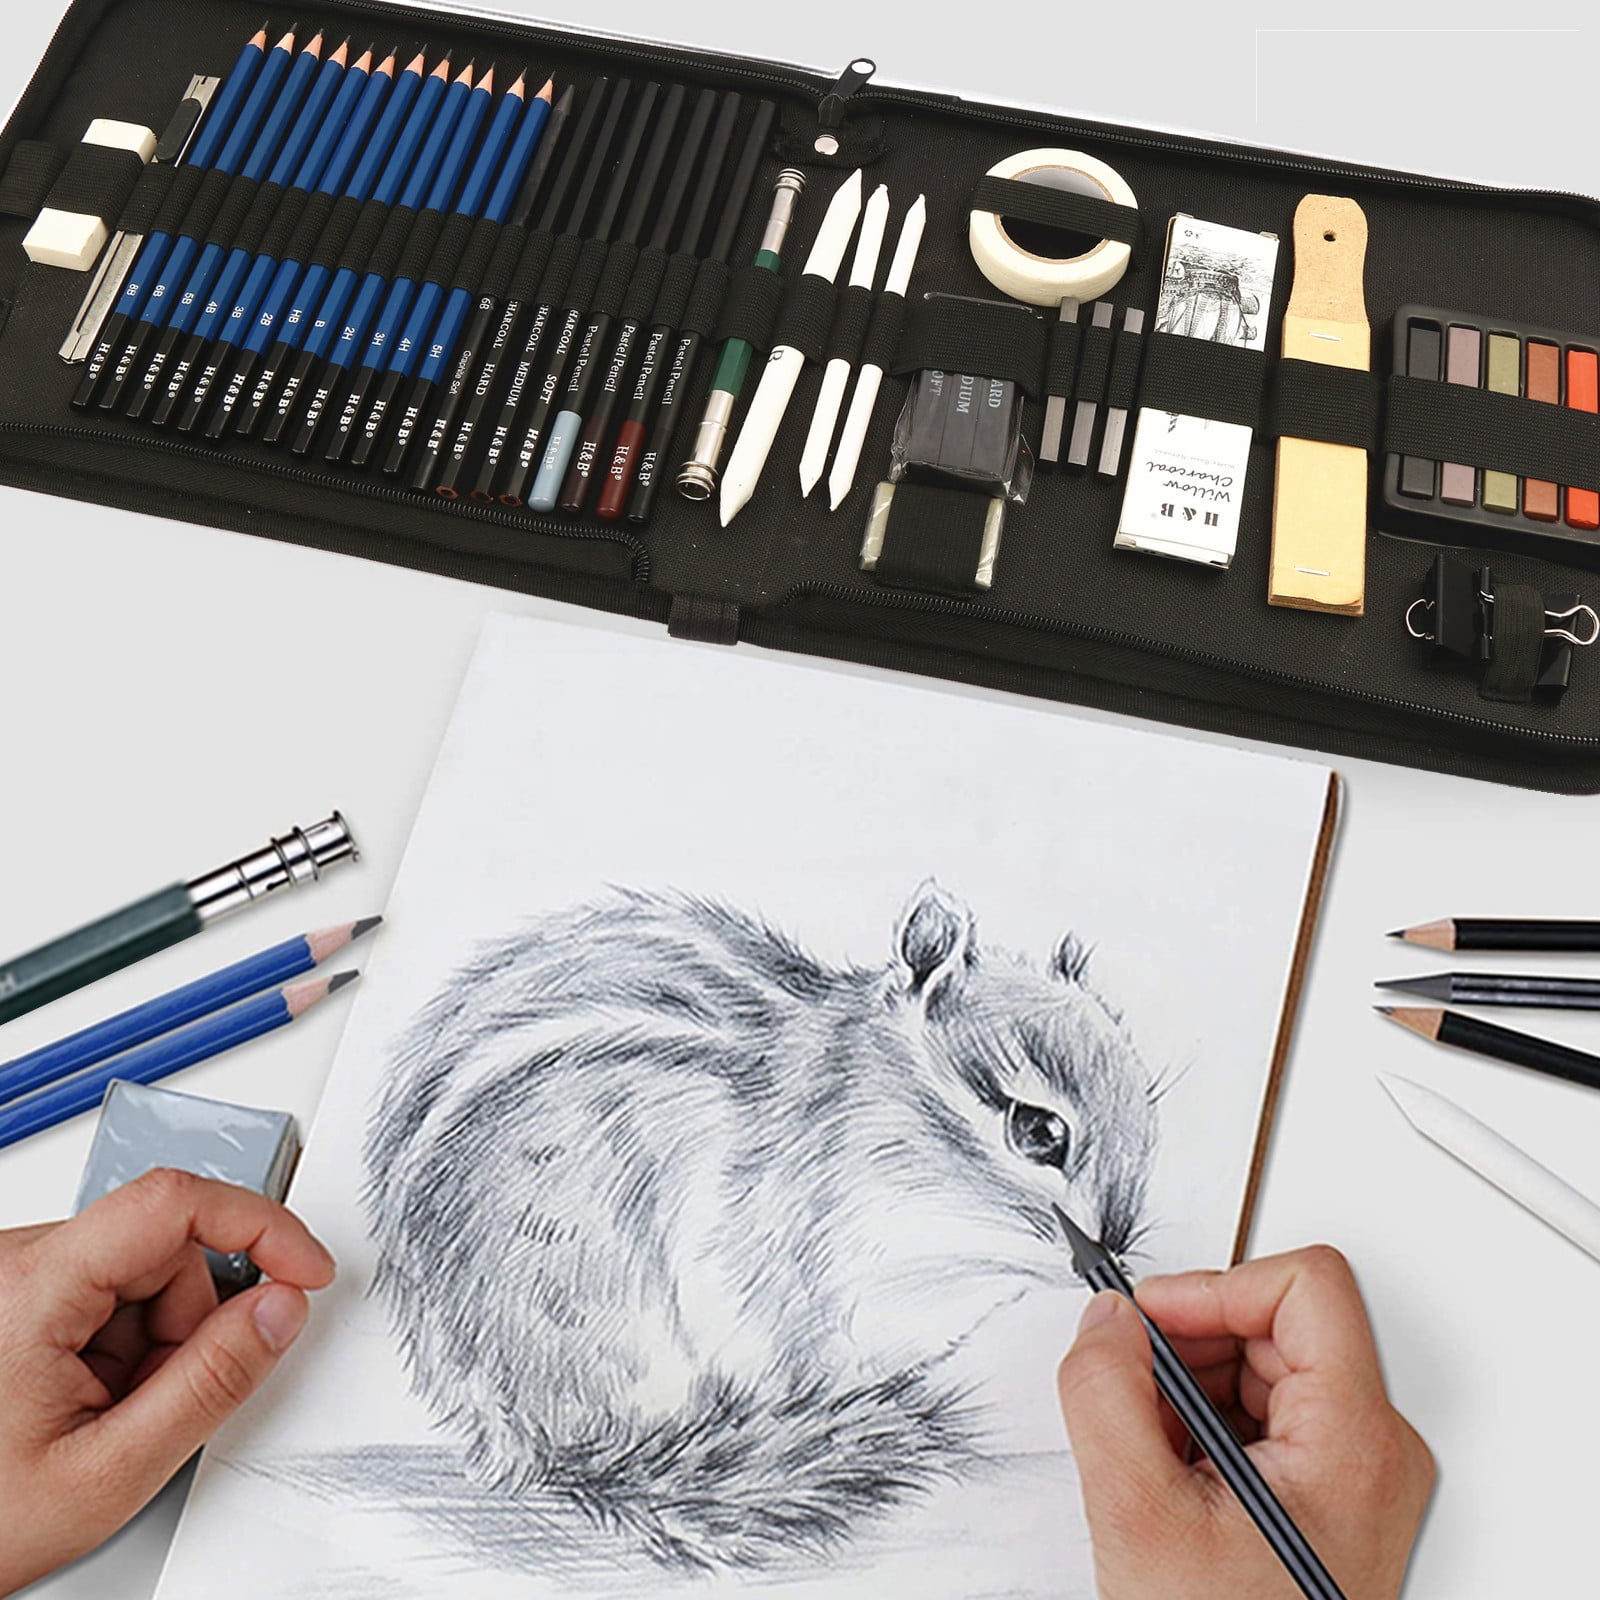 Handyman Crafts 50pcs Sketching Drawing Pencils Set Art Supplies | Sketch pencils,Graphite,Charcoal,Sketch book,Drawing Supplies | in Black Zipper